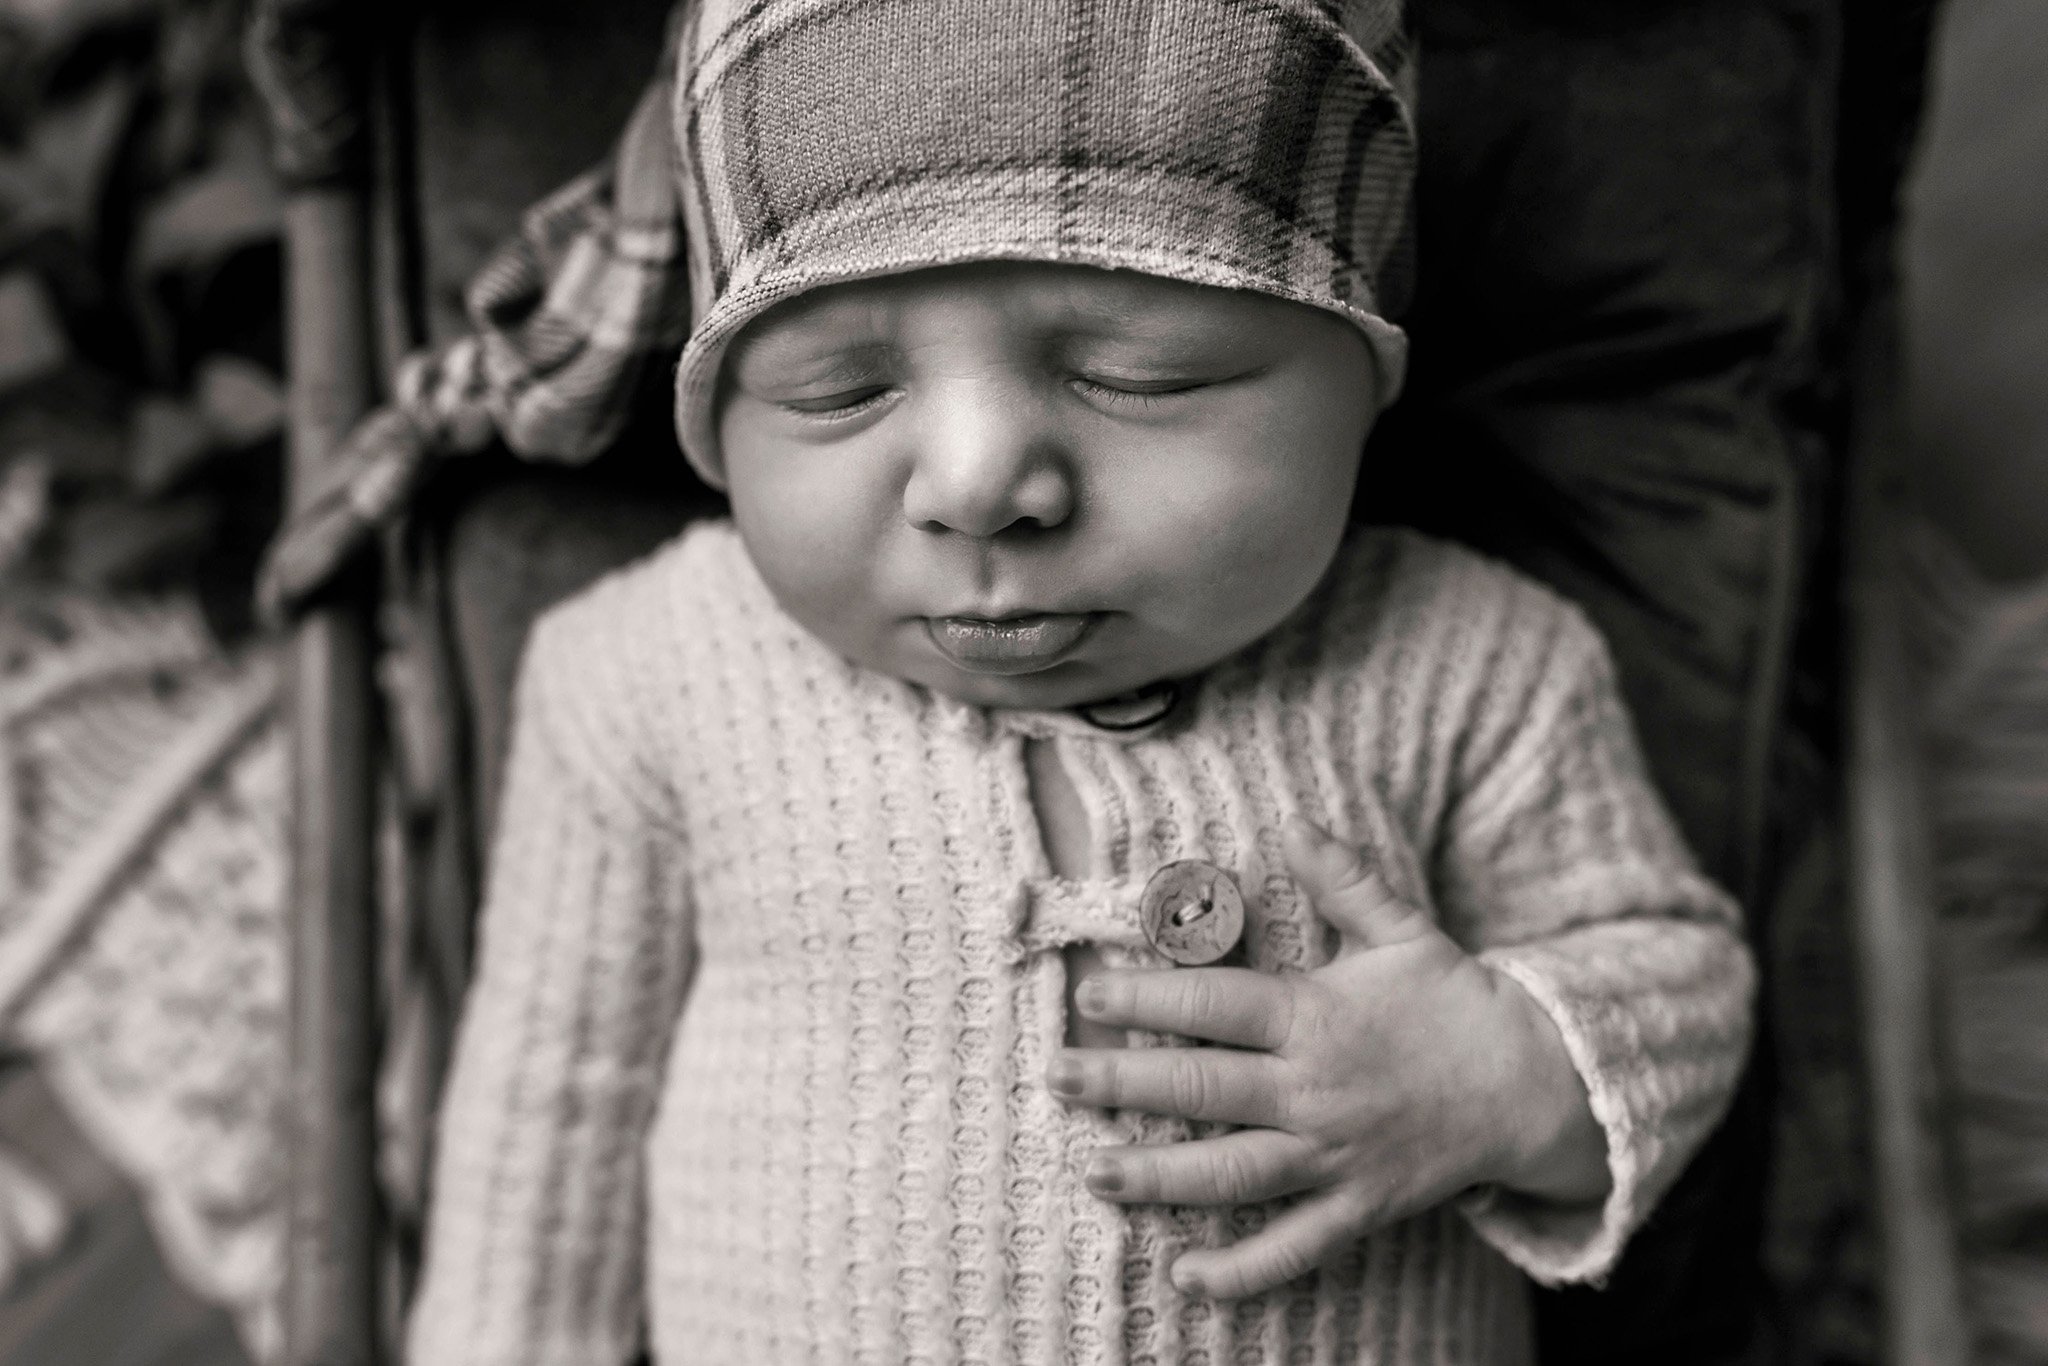 Morris County Newborn Photographer